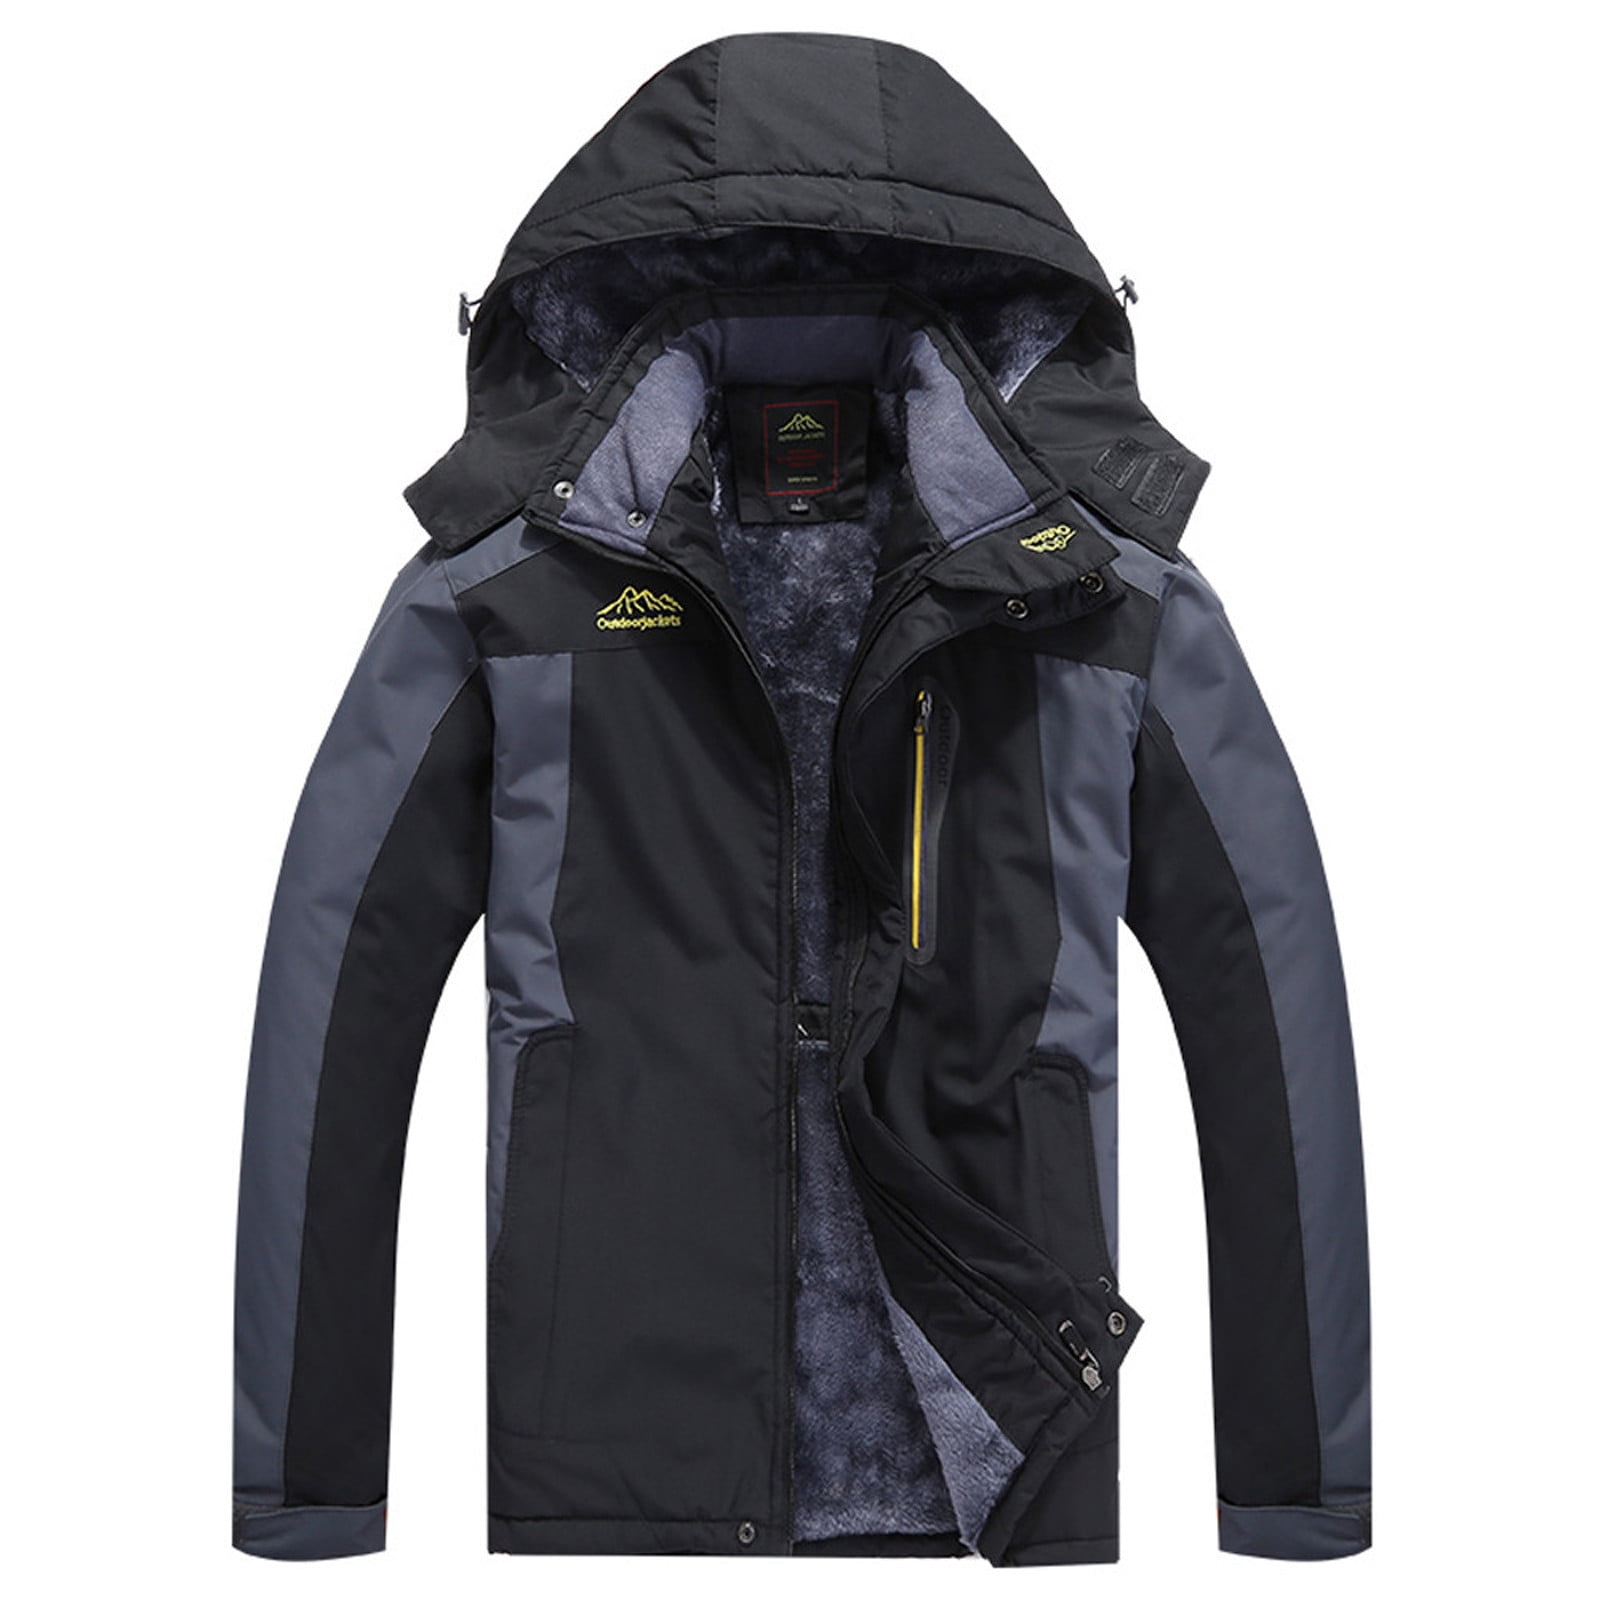 Tarmeek Waterproof Ski Jacket for Men Warm Winter Outdoor Solid Color ...